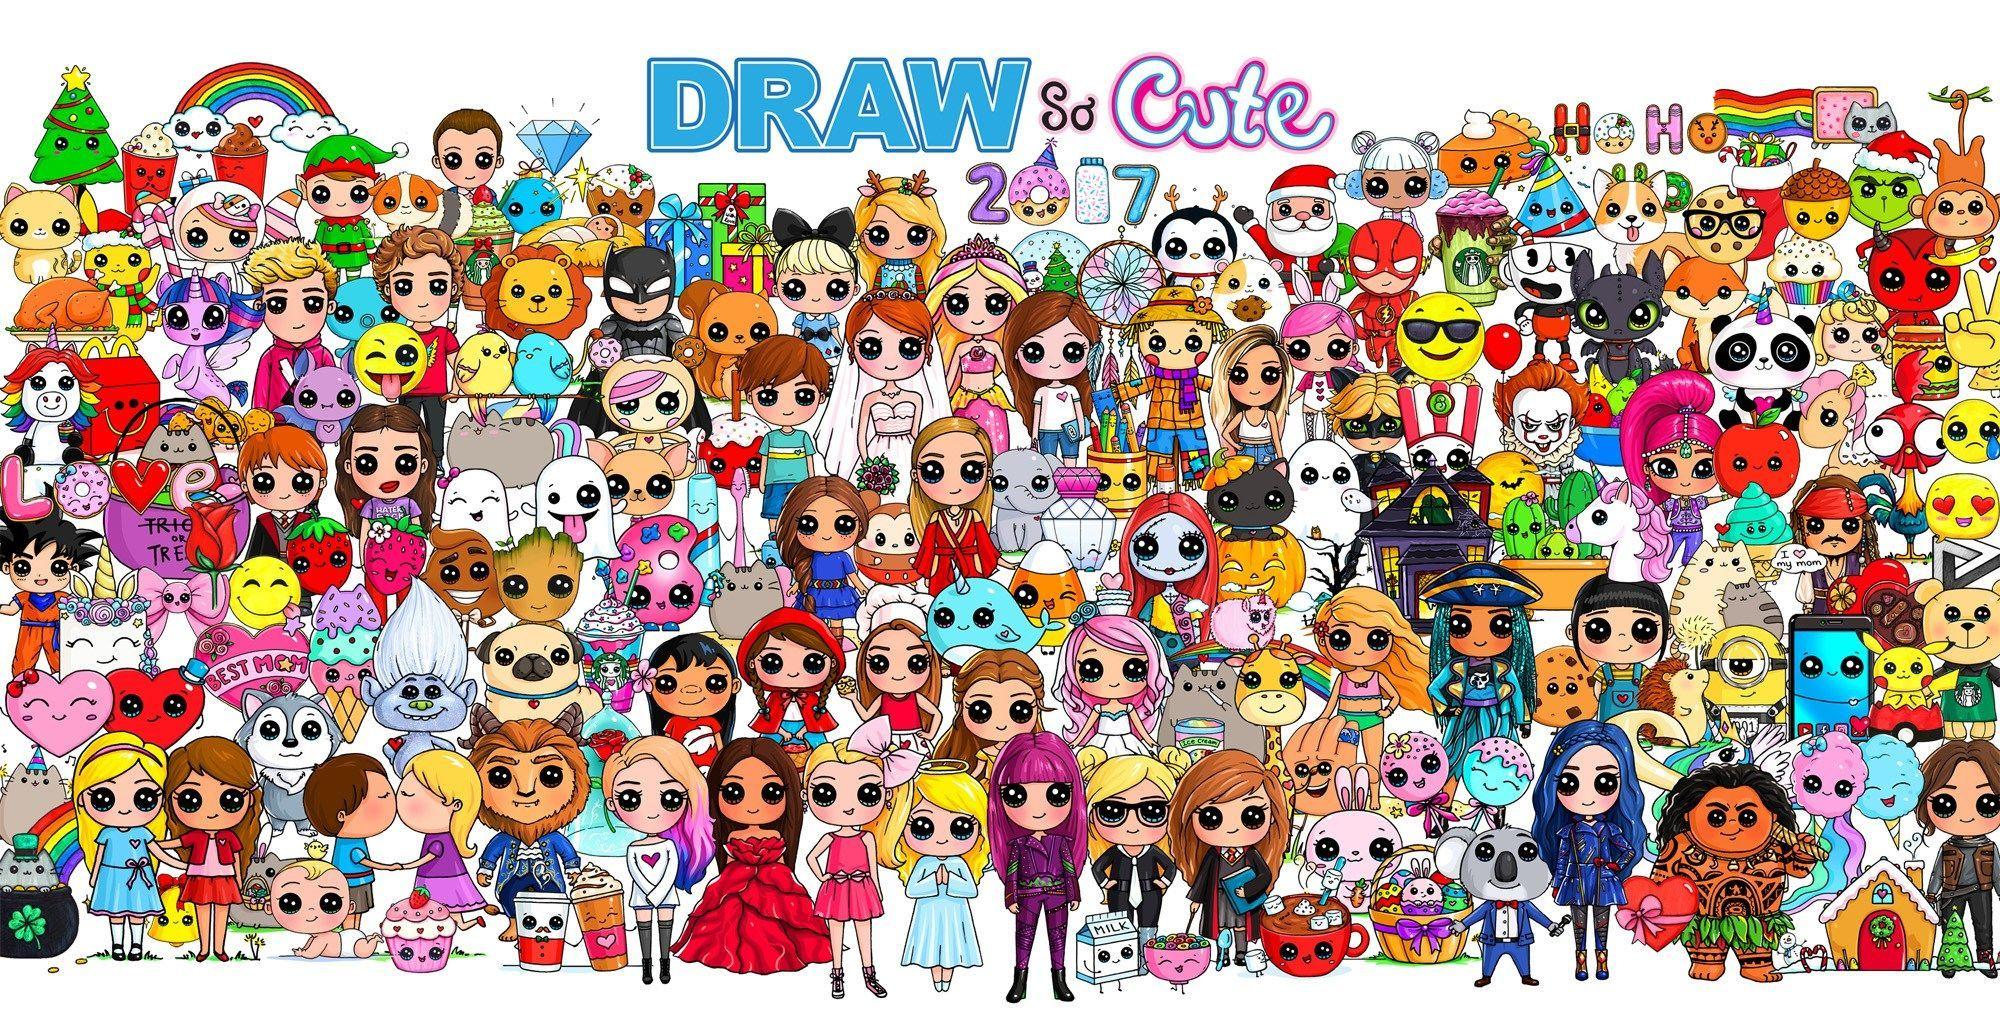 Draw So Cute | Cute drawings, Girl drawing, Barbie drawing